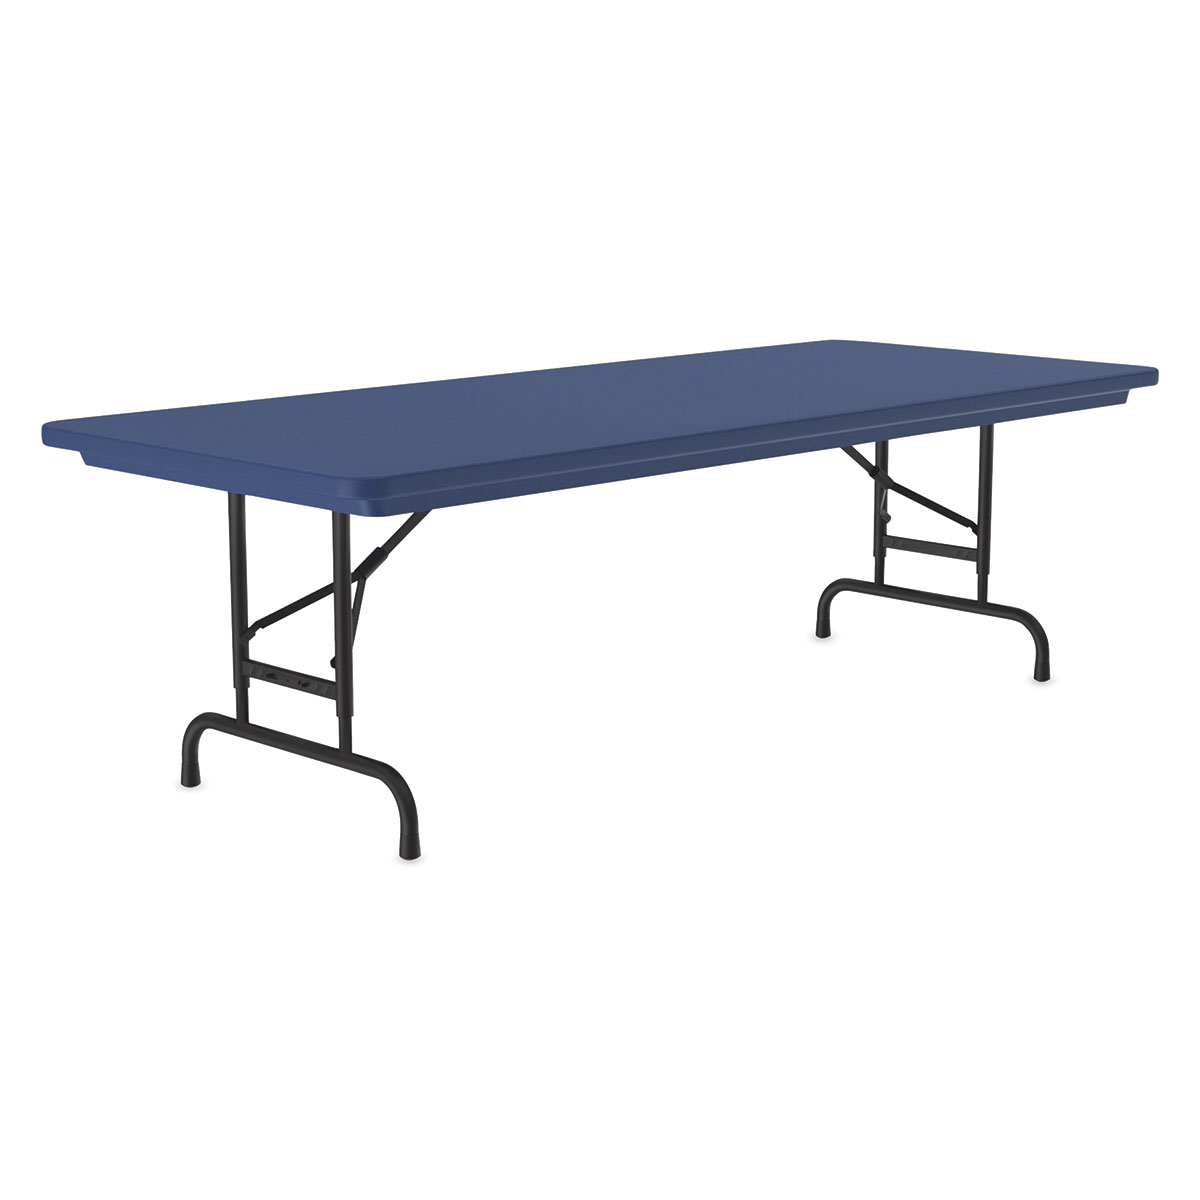 Correll Plastic Resin Folding Table - 30' x 72', Blue, Adjustable Height